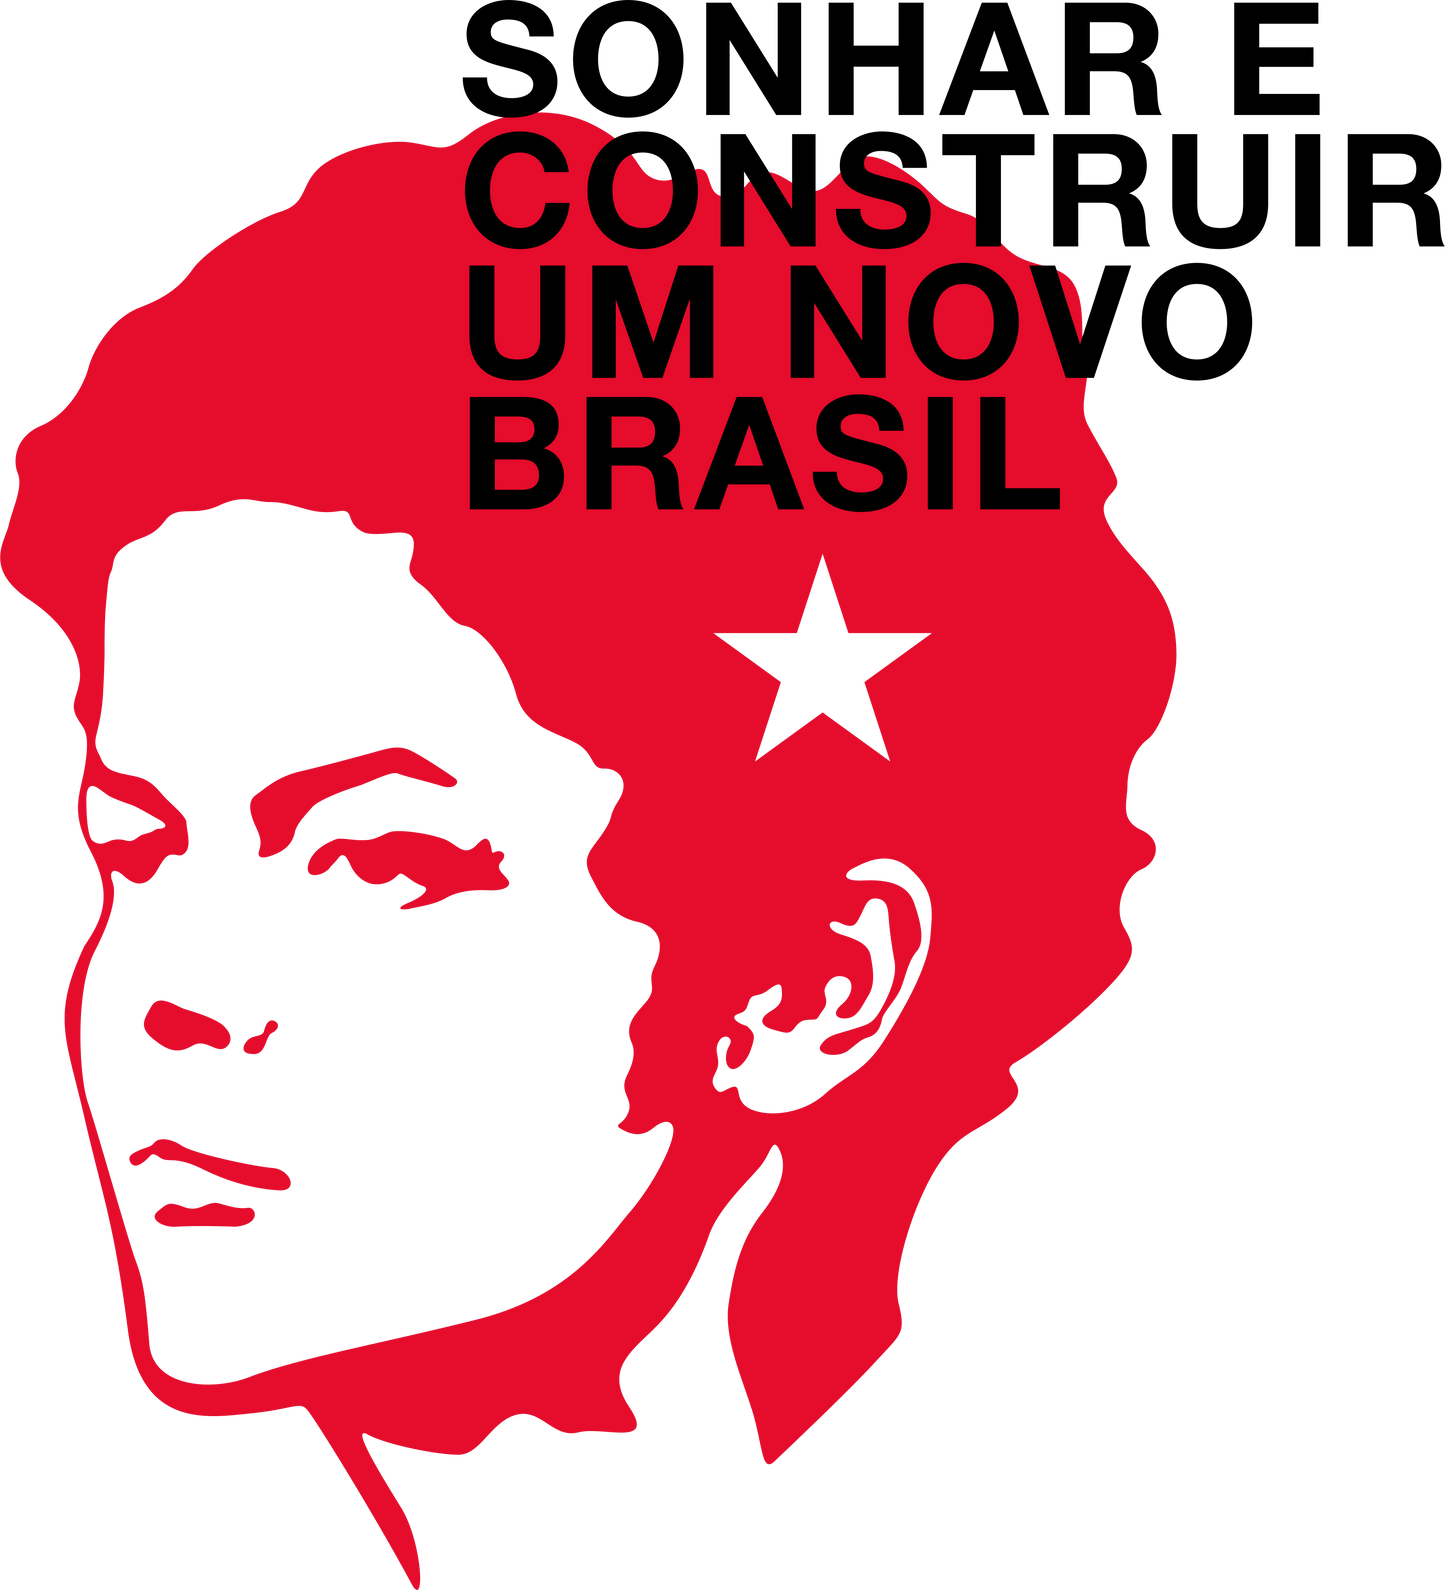 Camiseta Feminina Dilma Sonhar e Construir um novo Brasil